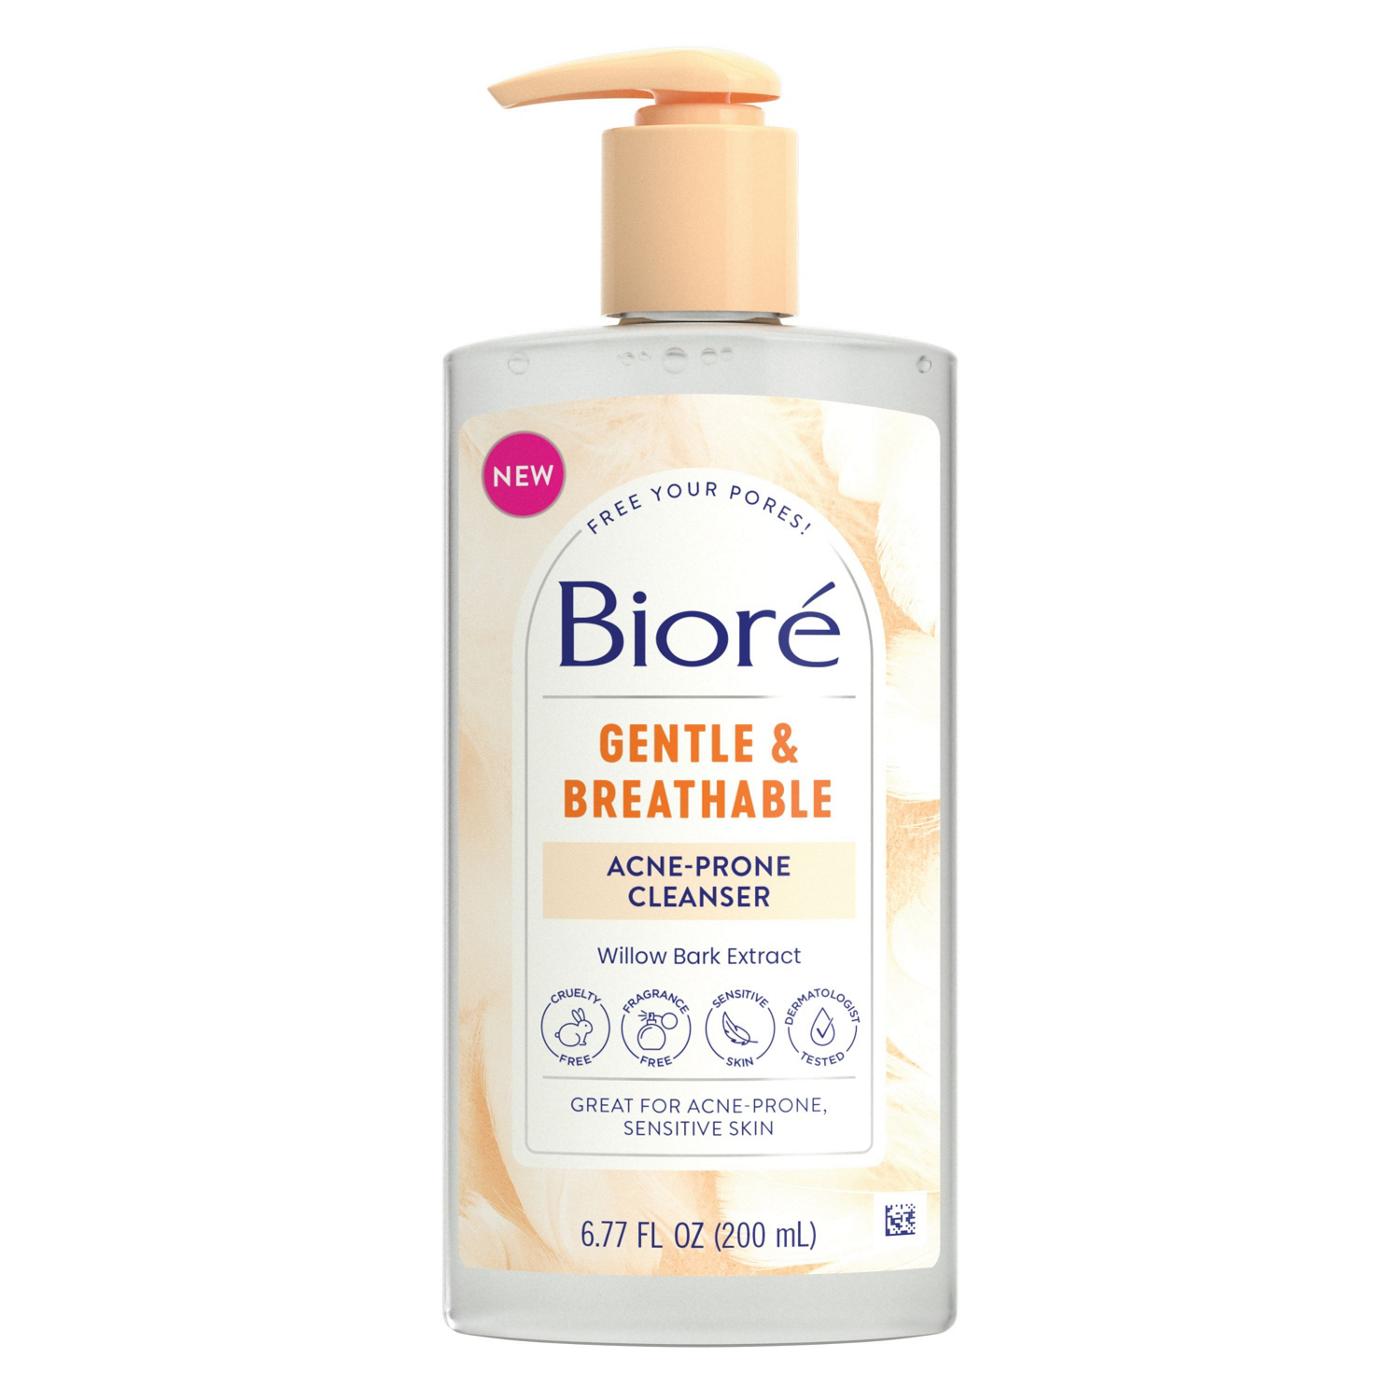 Bioré Gentle & Breathable Acne-Prone Cleanser; image 1 of 2